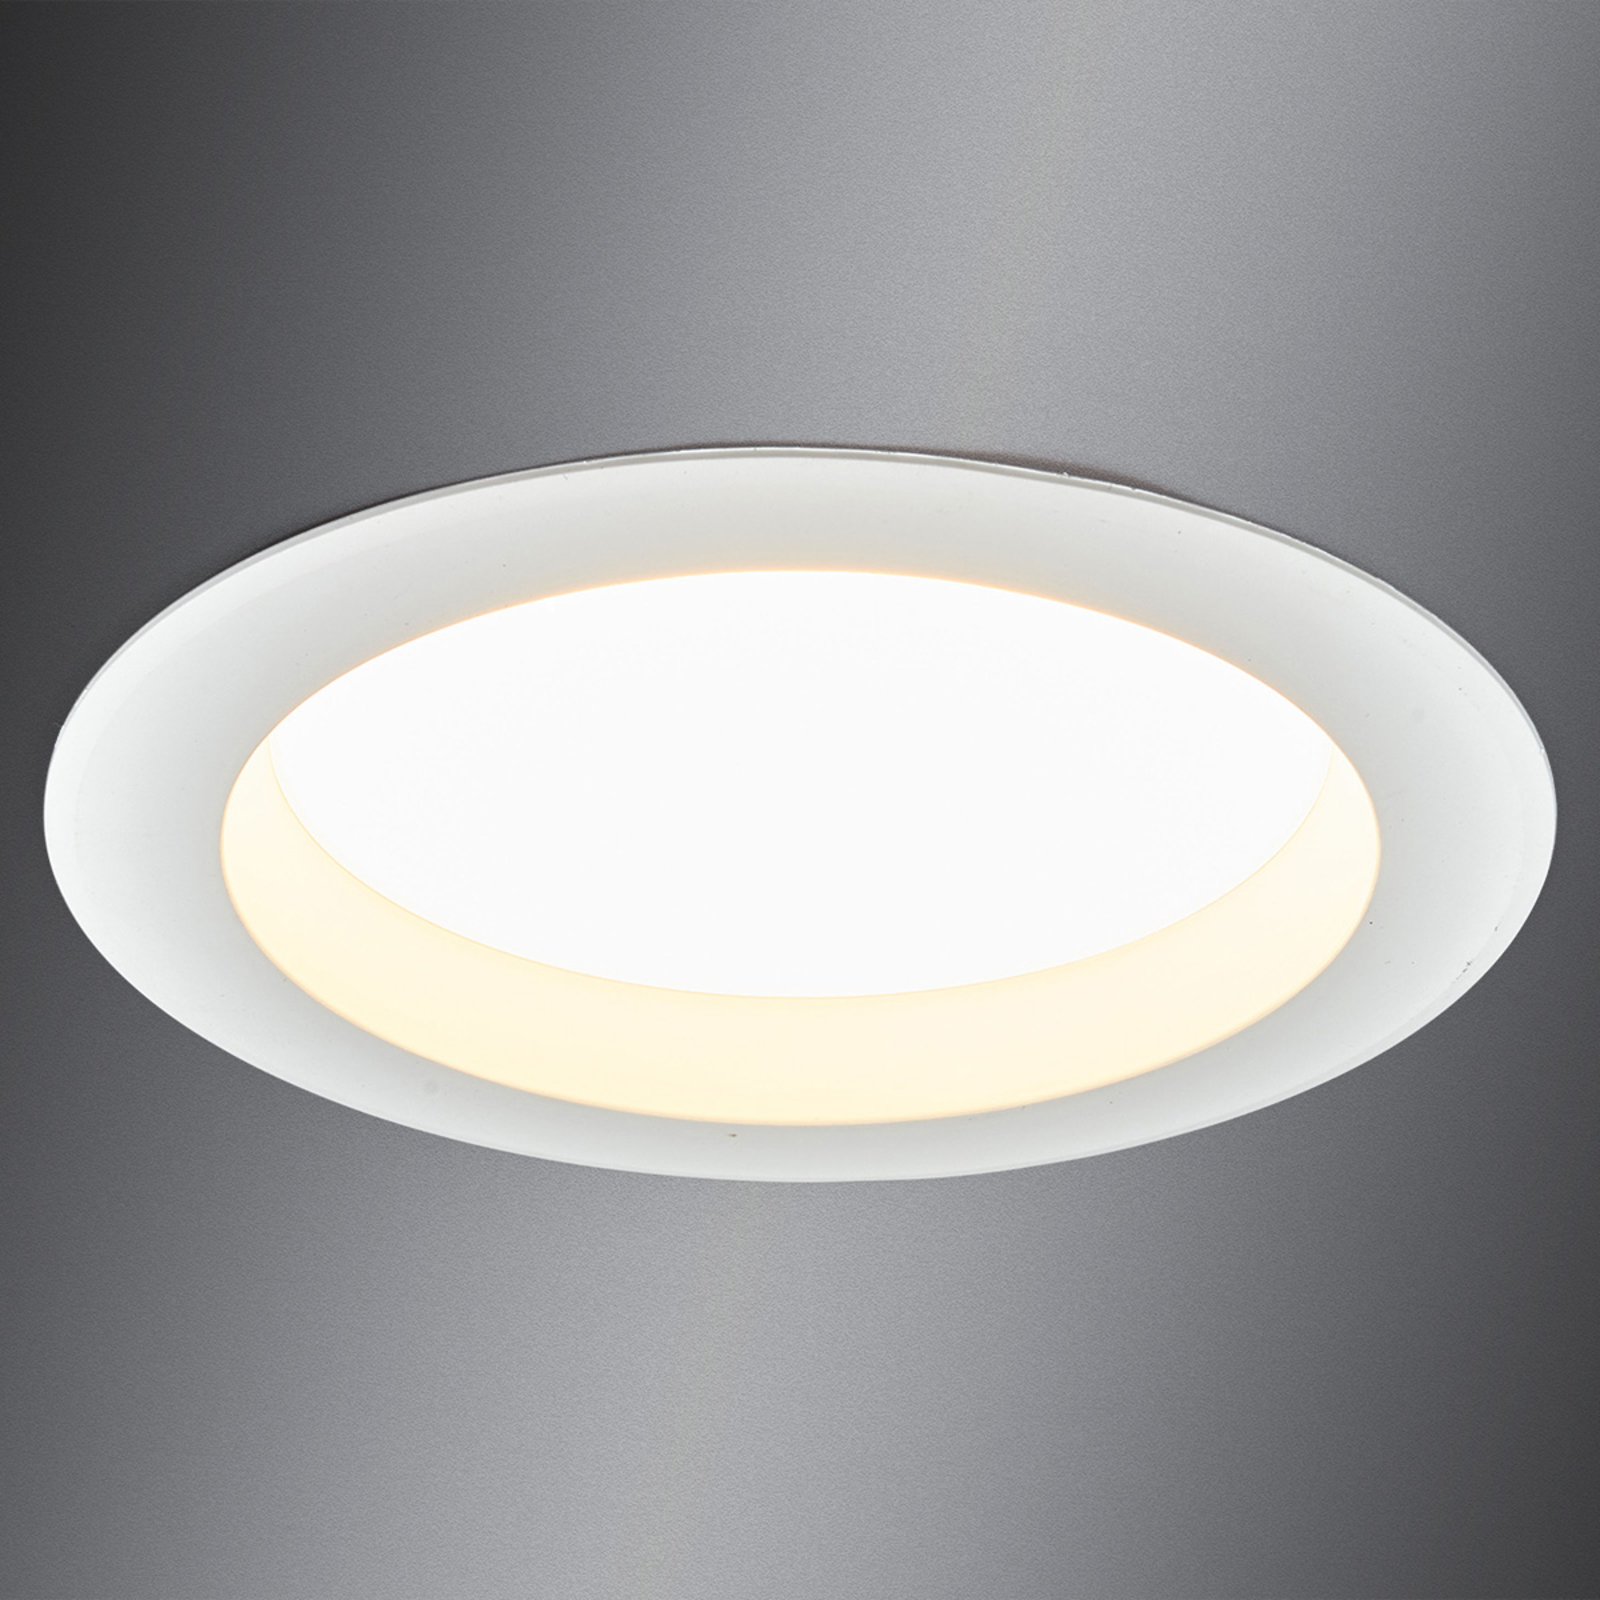 Downlight LED de luz brillante Arian, 17,4 cm 15W